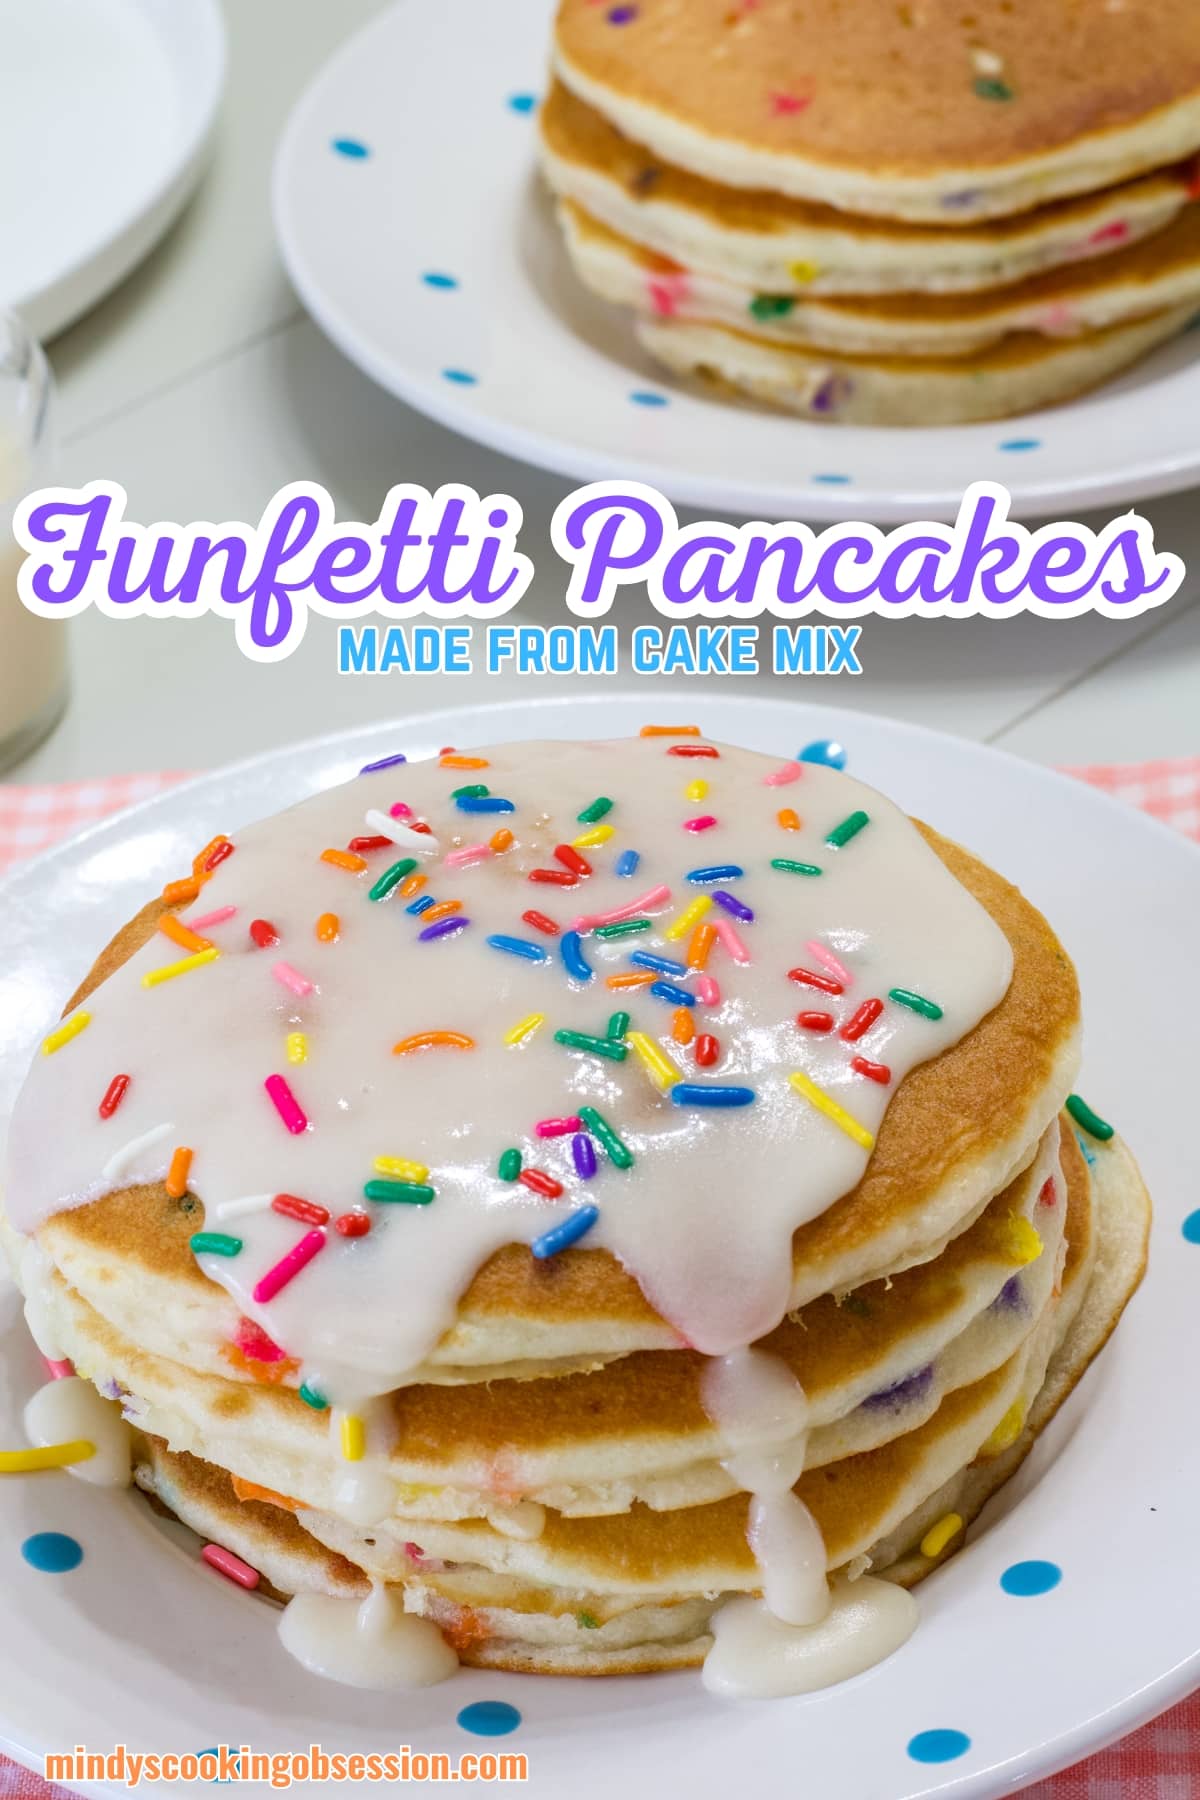 Easy Funfetti Birthday Cake Mix Pancakes Recipe – Fluffy pancakes are a fun breakfast that take 4 ingredients and minutes to prepare. via @mindyscookingobsession